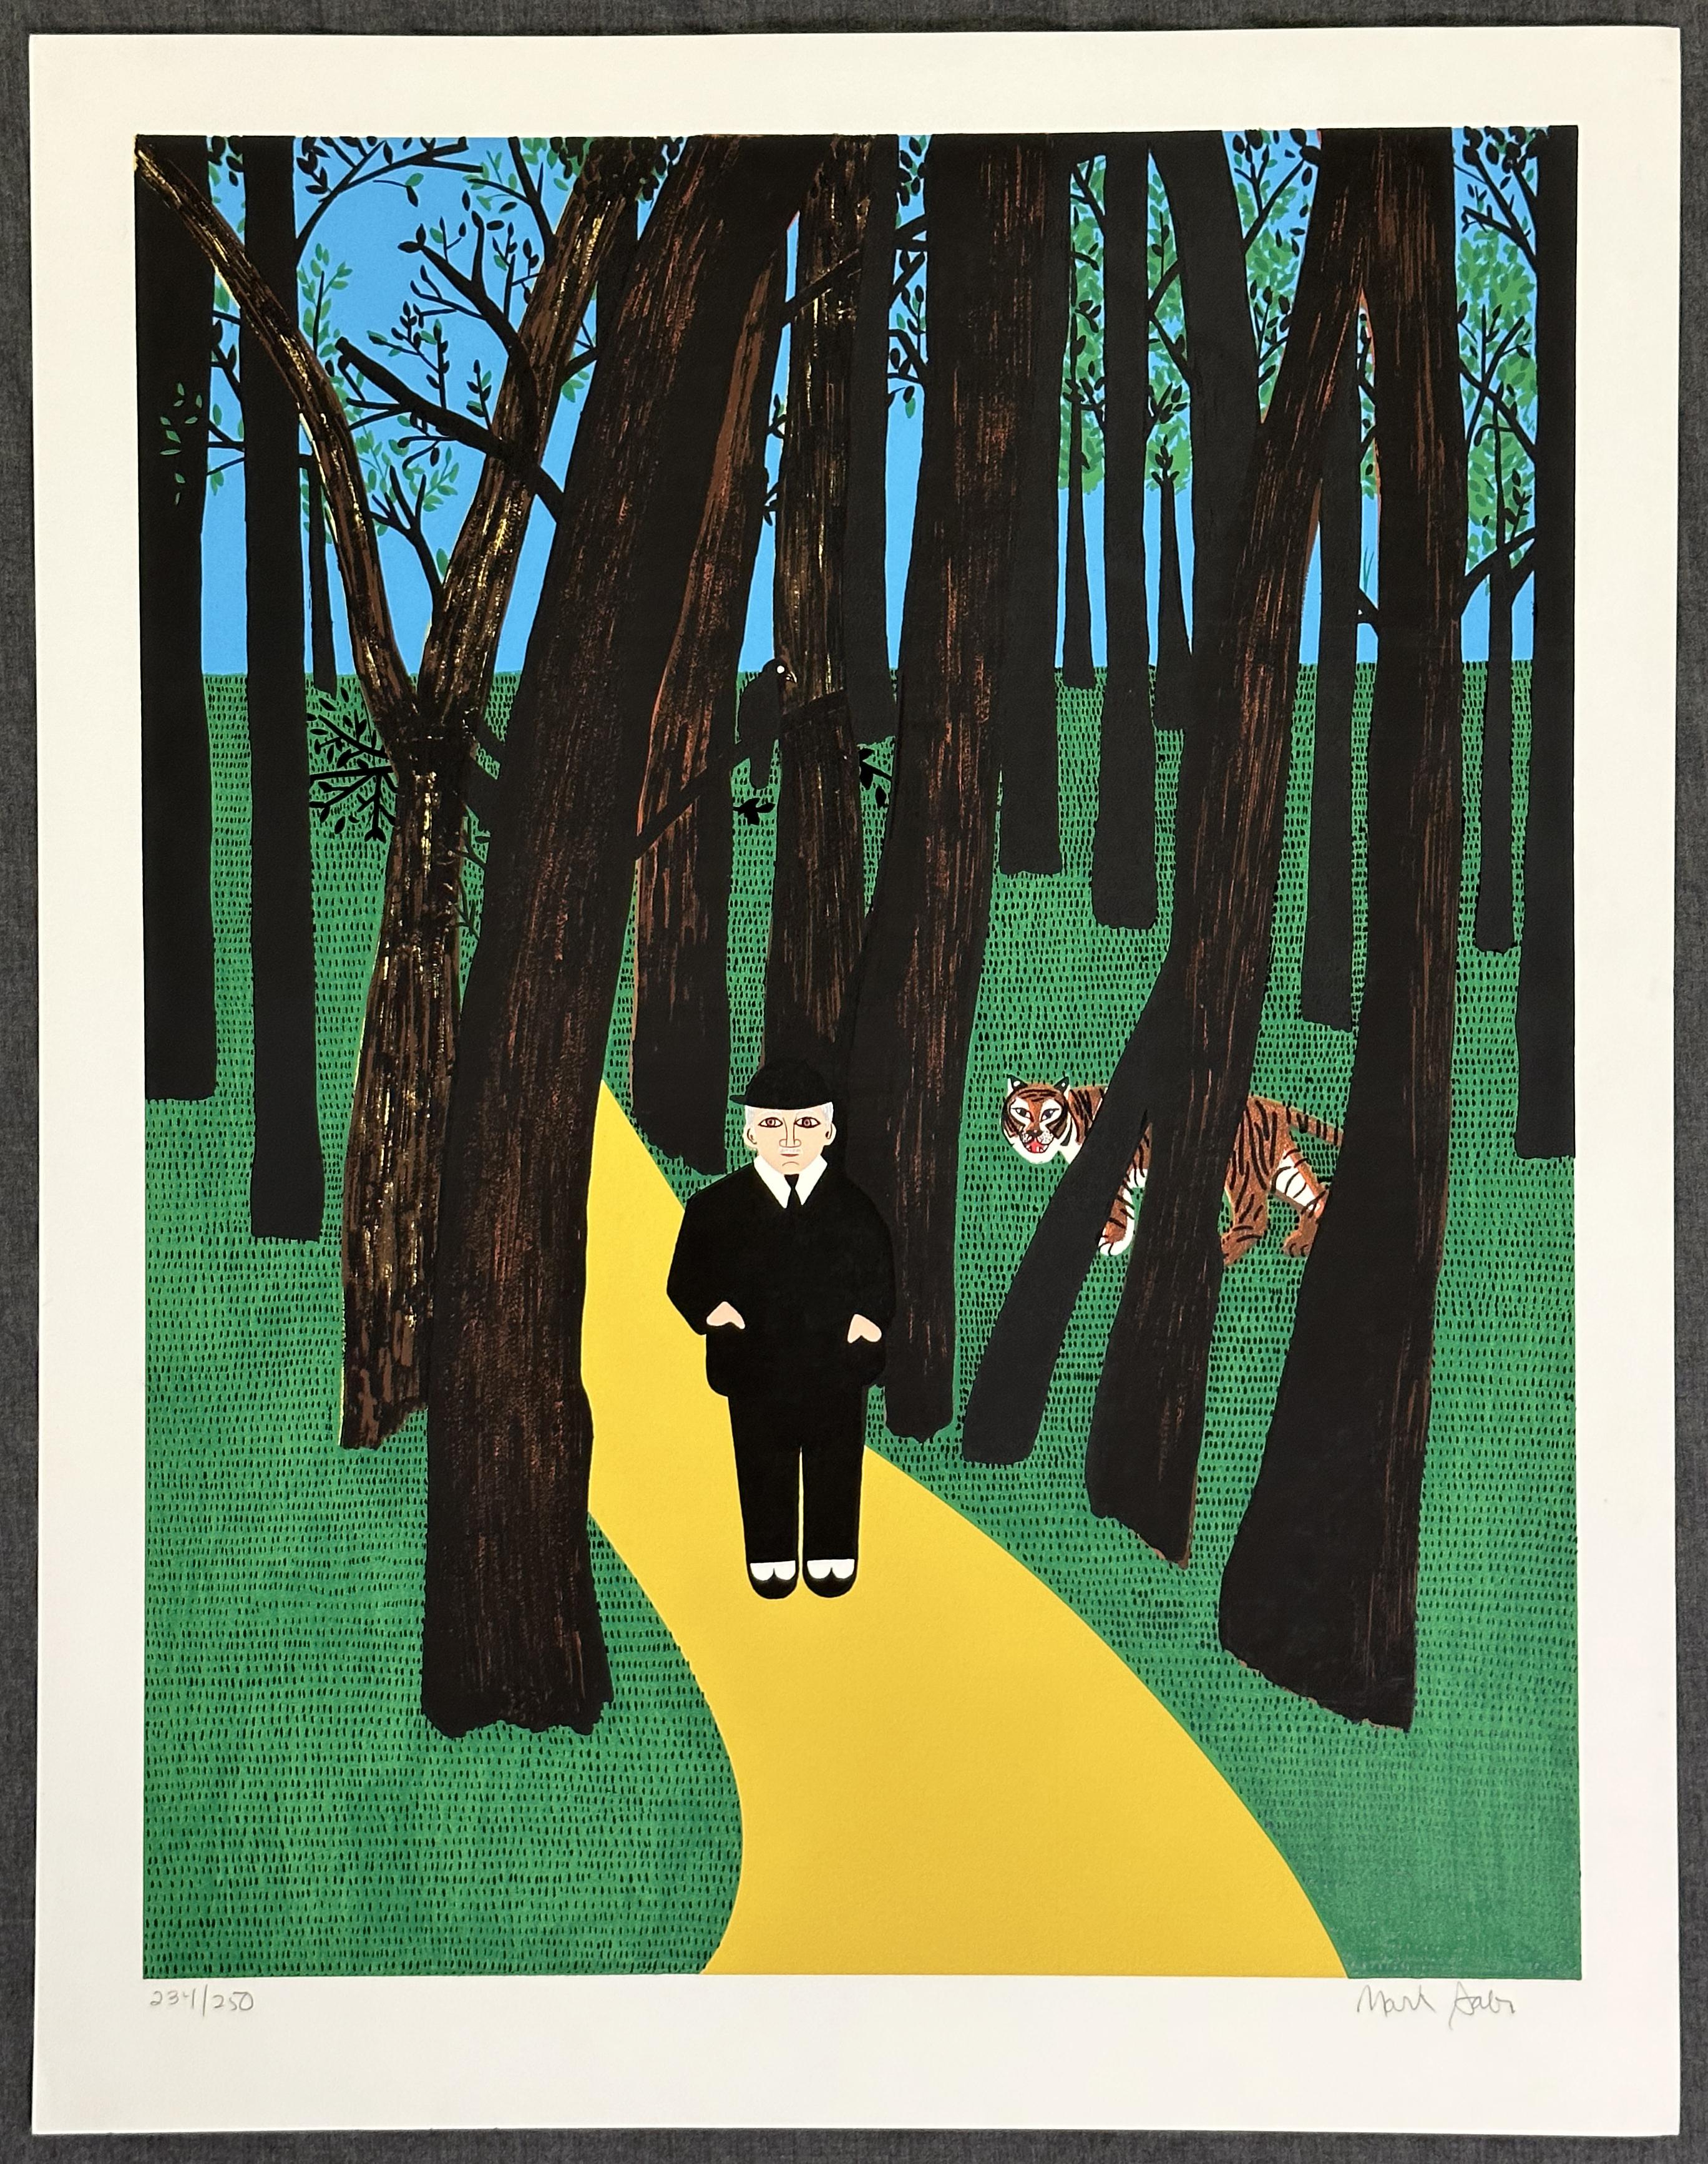 L'homme dans la forêt 1980 Grande sérigraphie signée - Print de Mark Sabin 